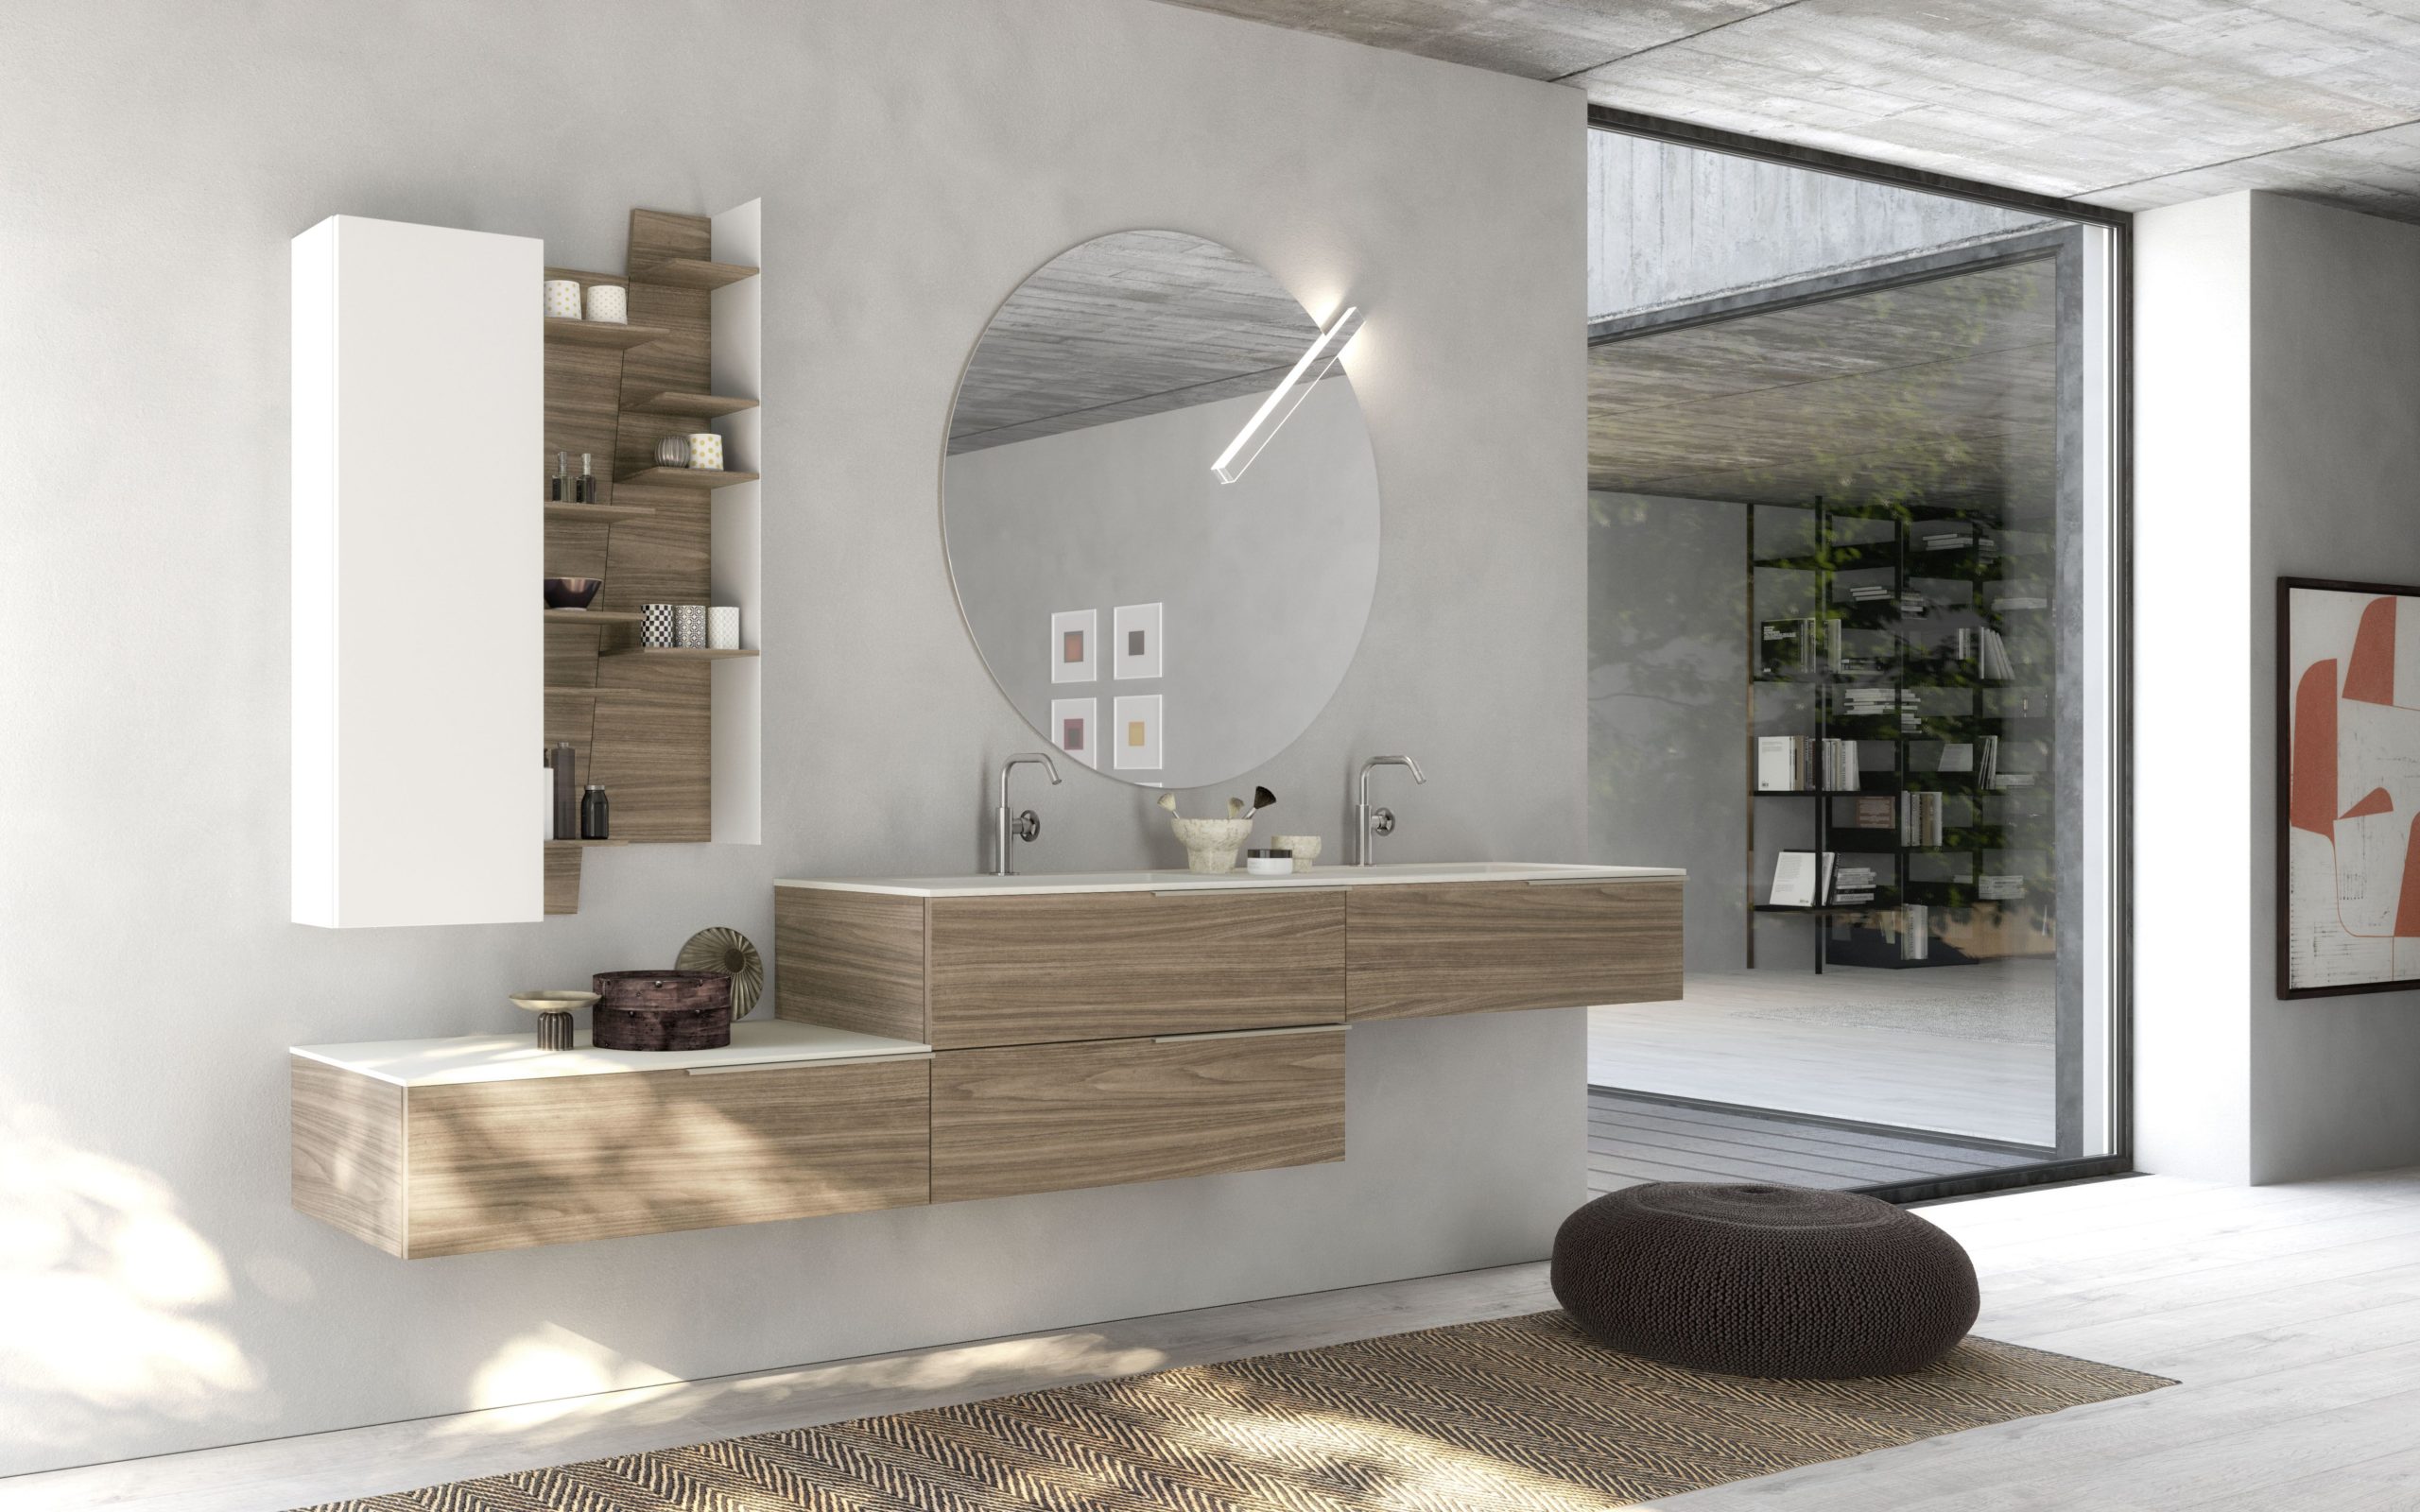 Luxury bathroom with wood offset vanity and wall storage